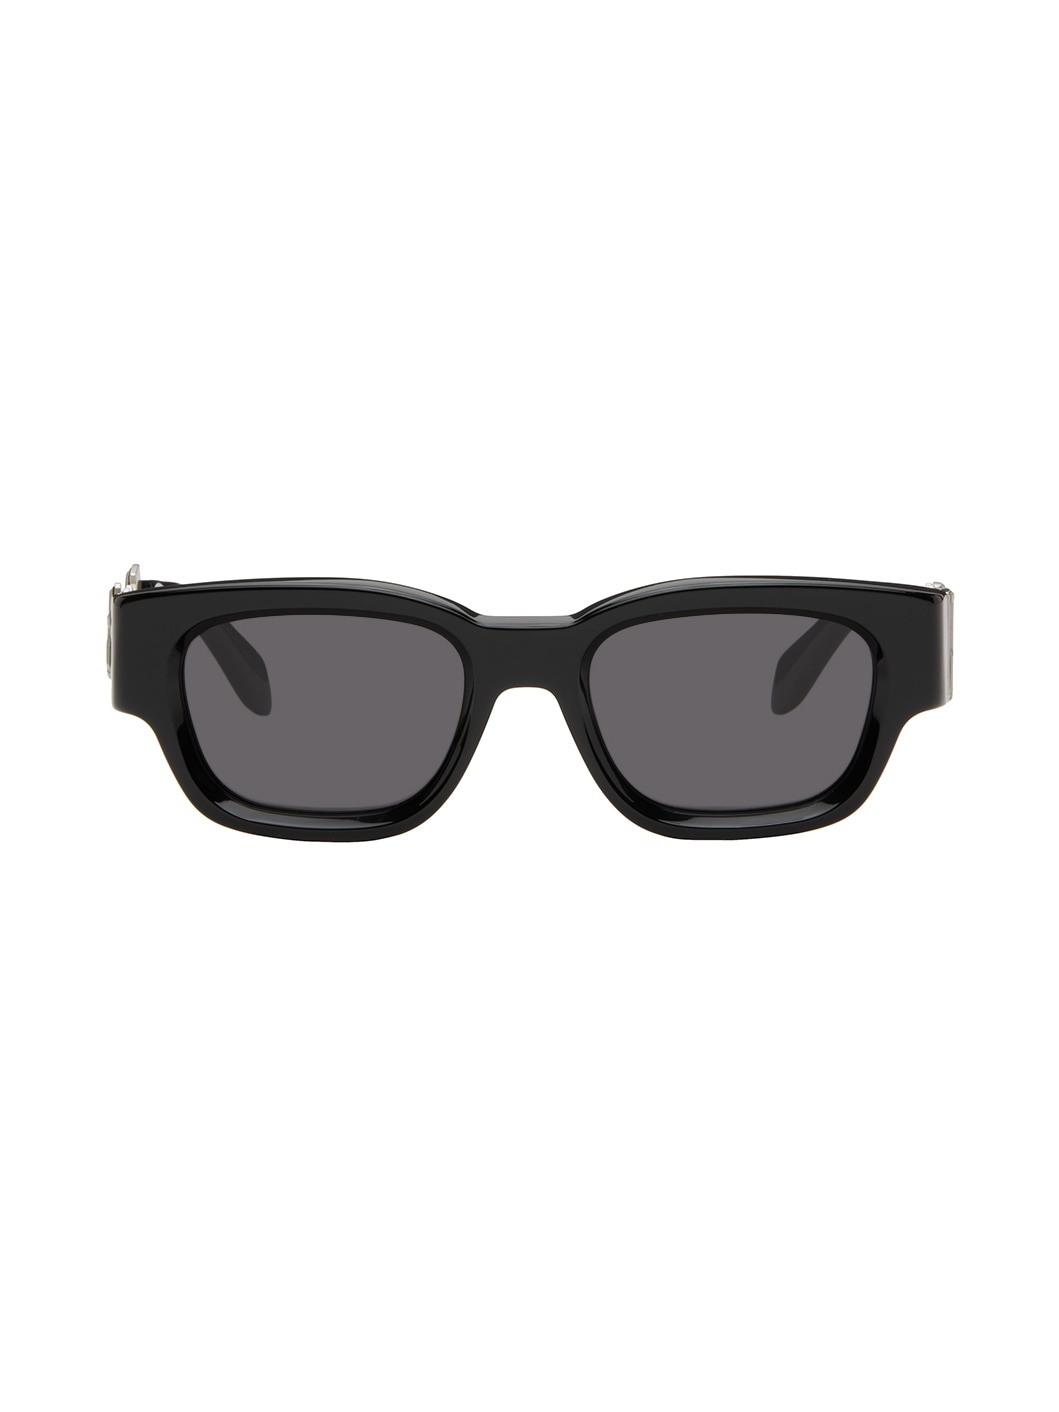 Black Posey Sunglasses - 1